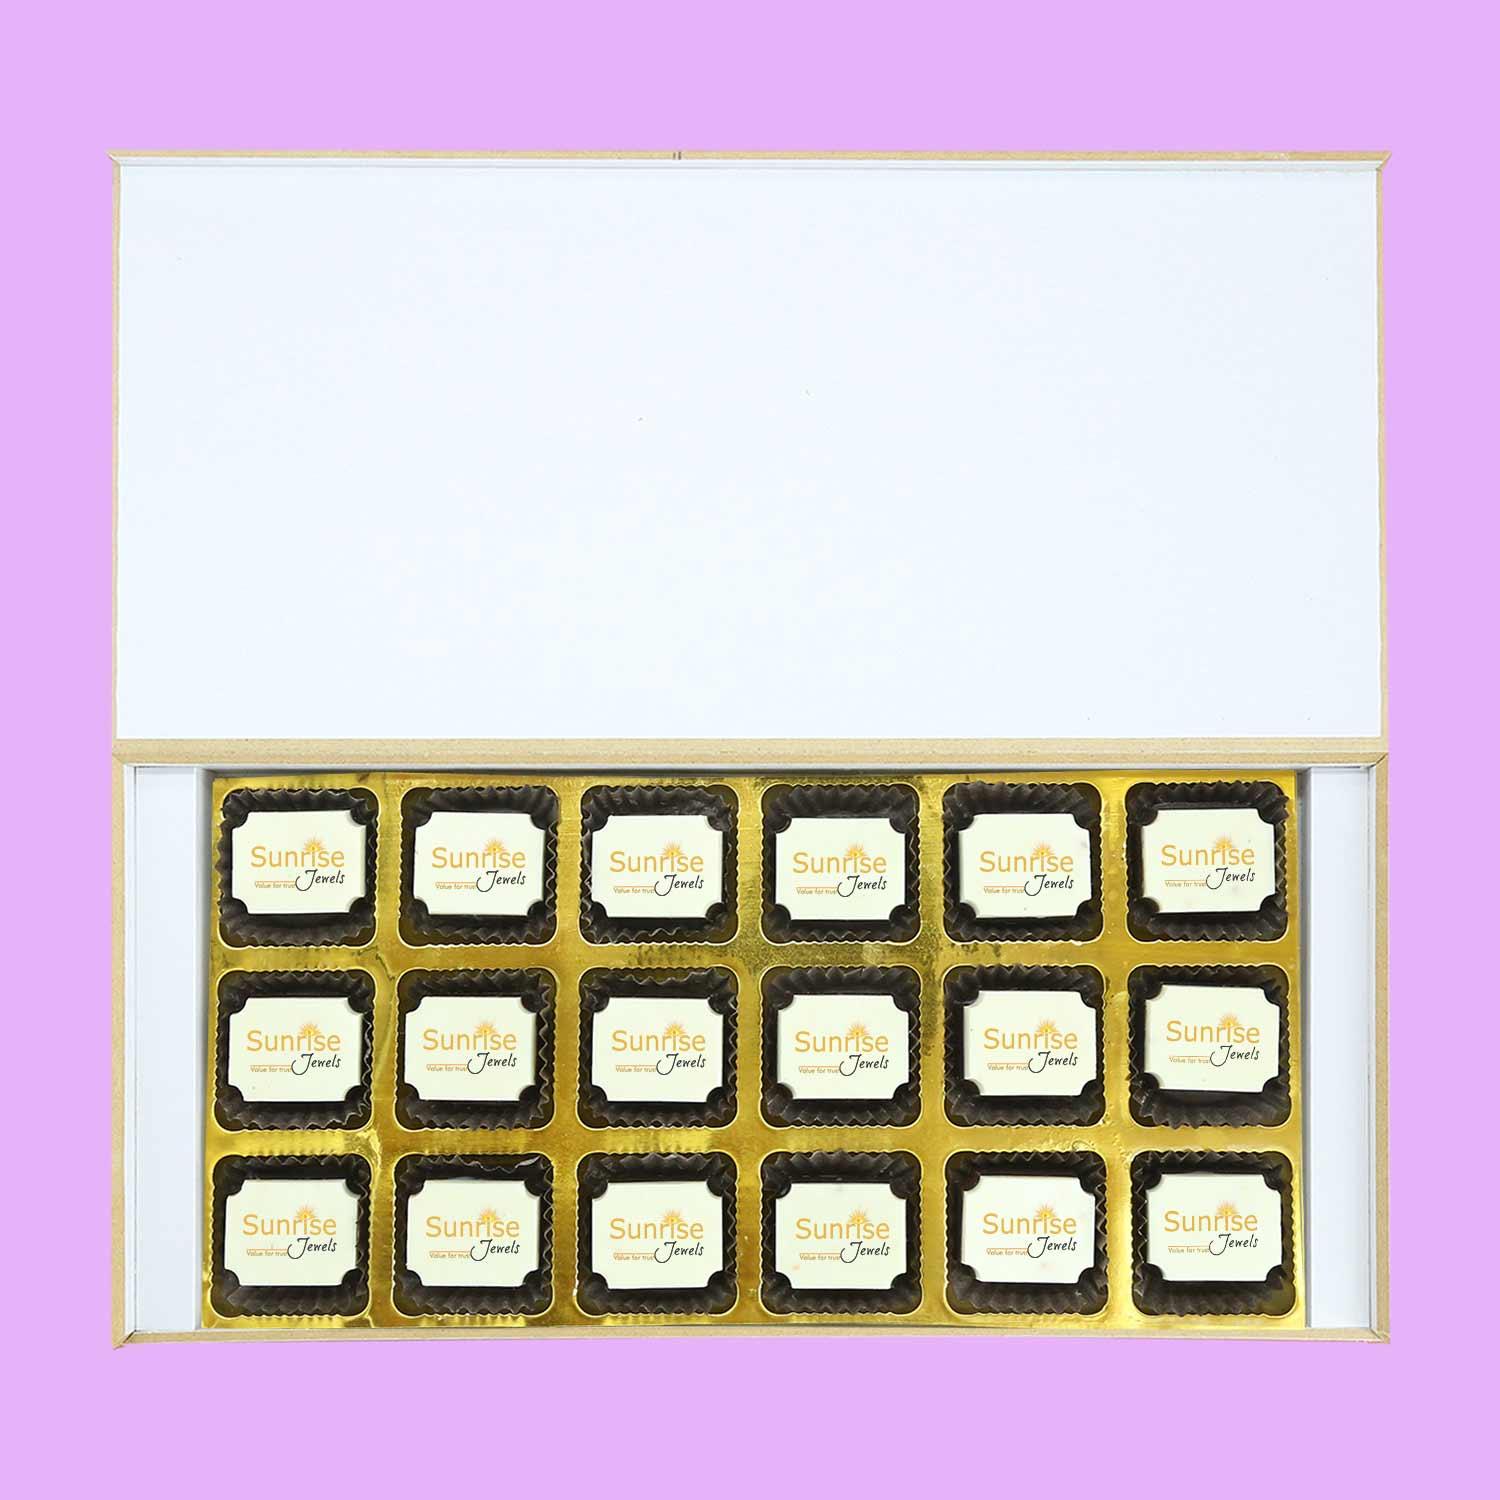 Wavy designed box of chocolates corporate gift - Choco Manual ART